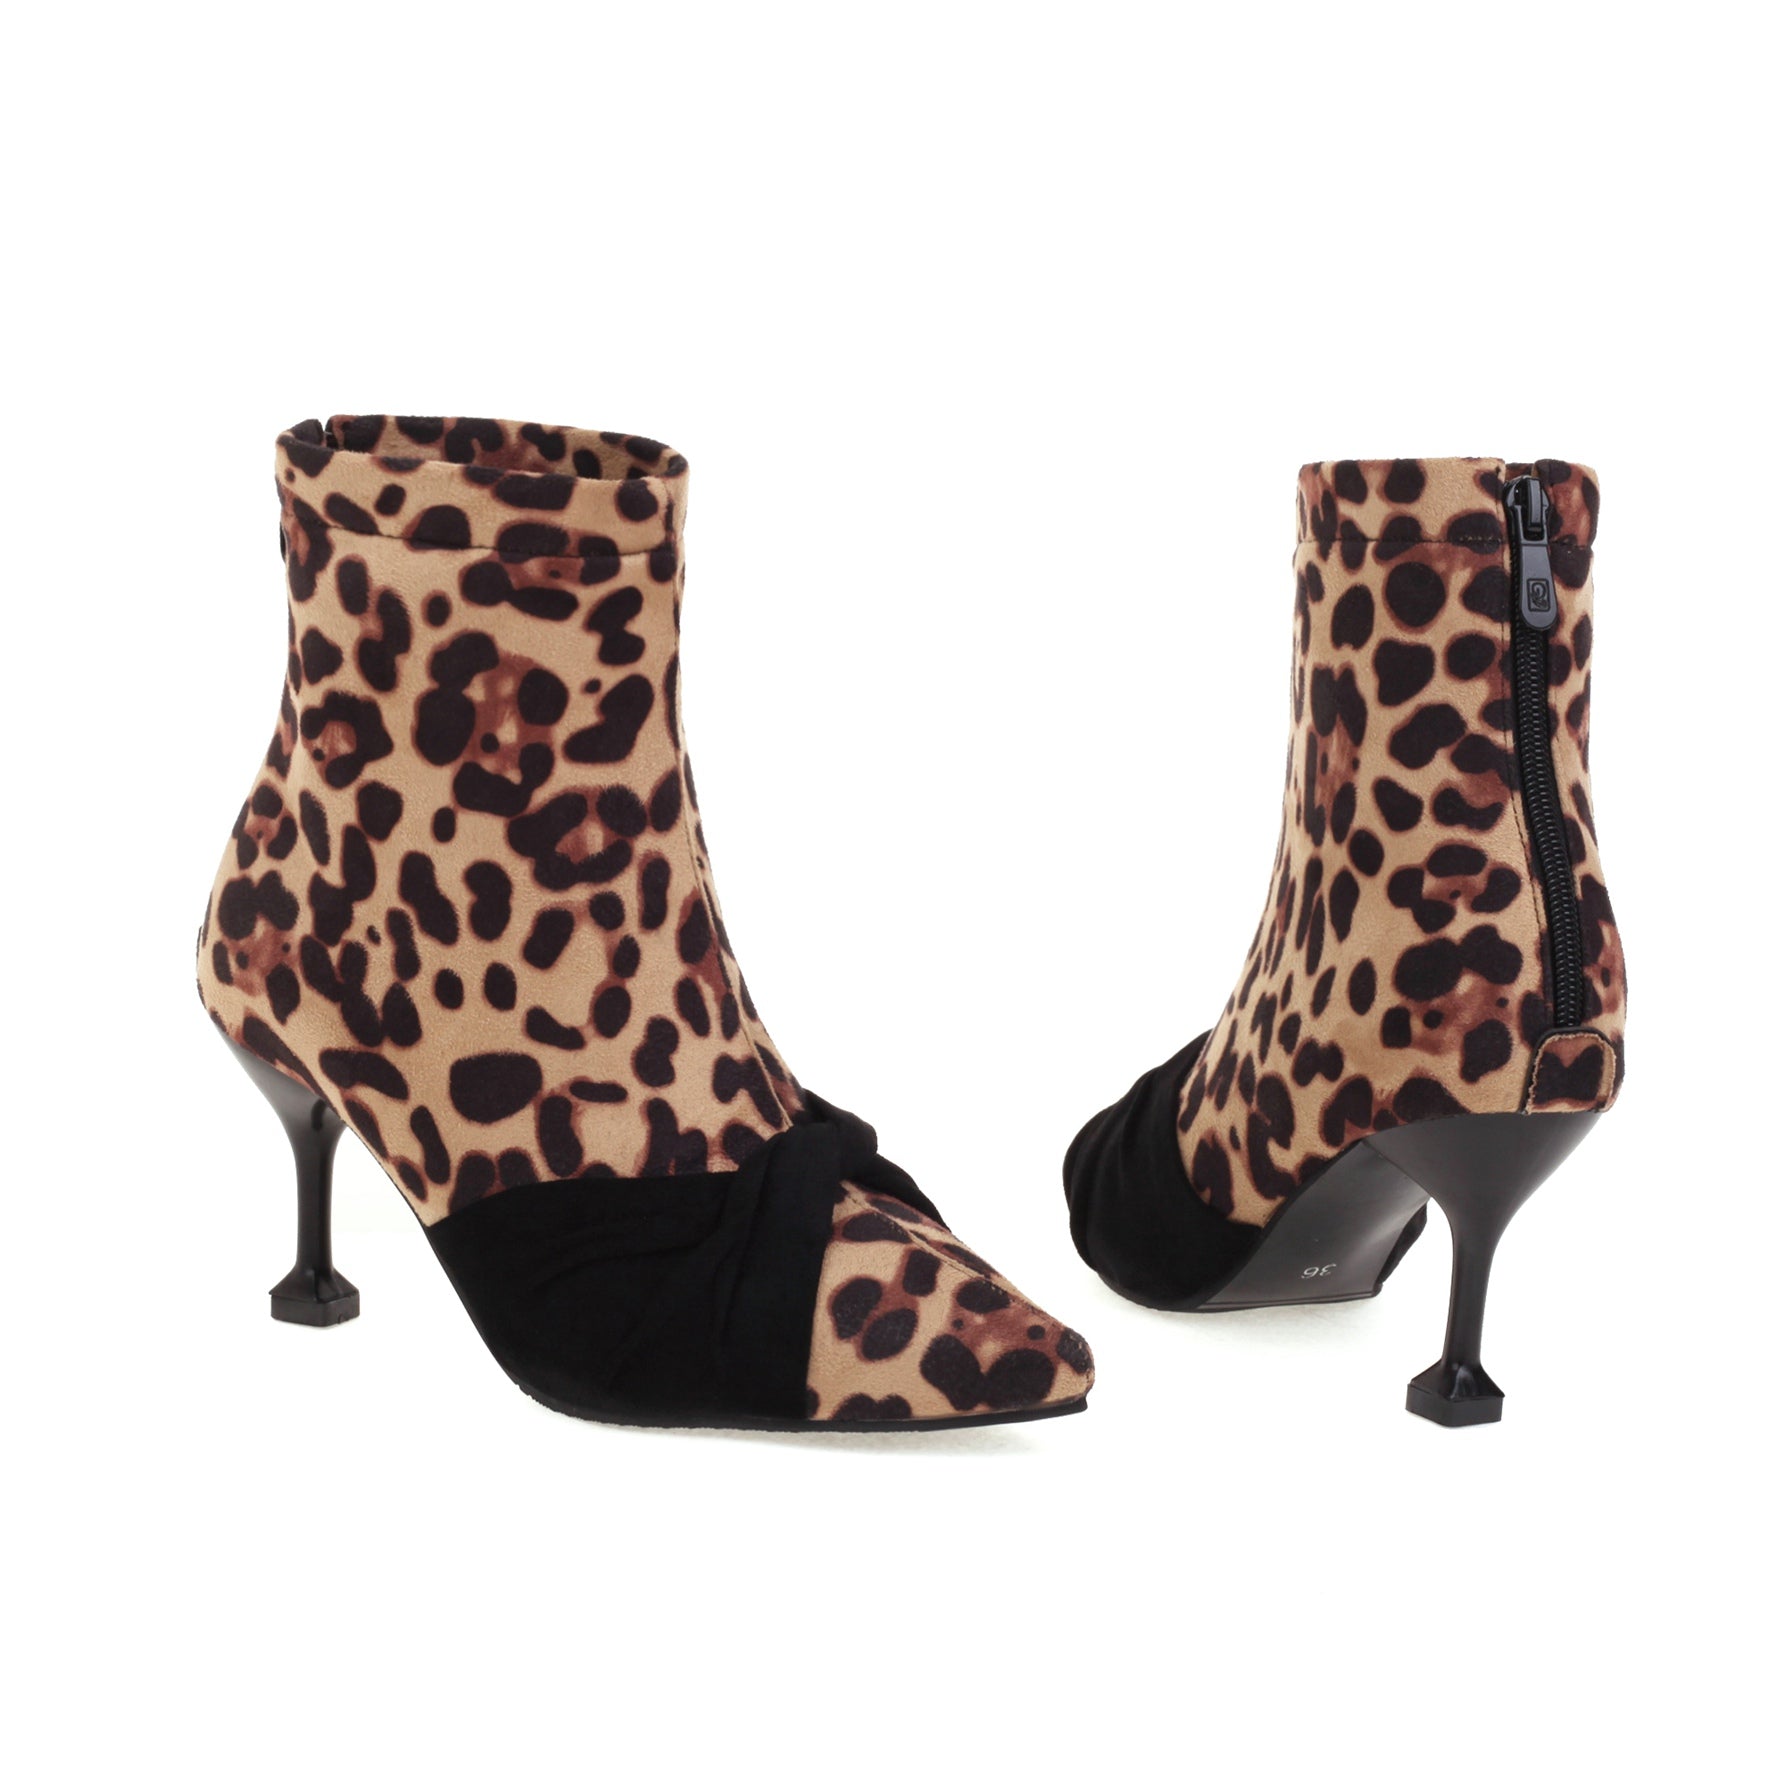 Bigsizeheels Stylish Slip-On Stiletto Heel Pointed Toe Banquet Thin Shoes - Leopard freeshipping - bigsizeheel®-size5-size15 -All Plus Sizes Available!